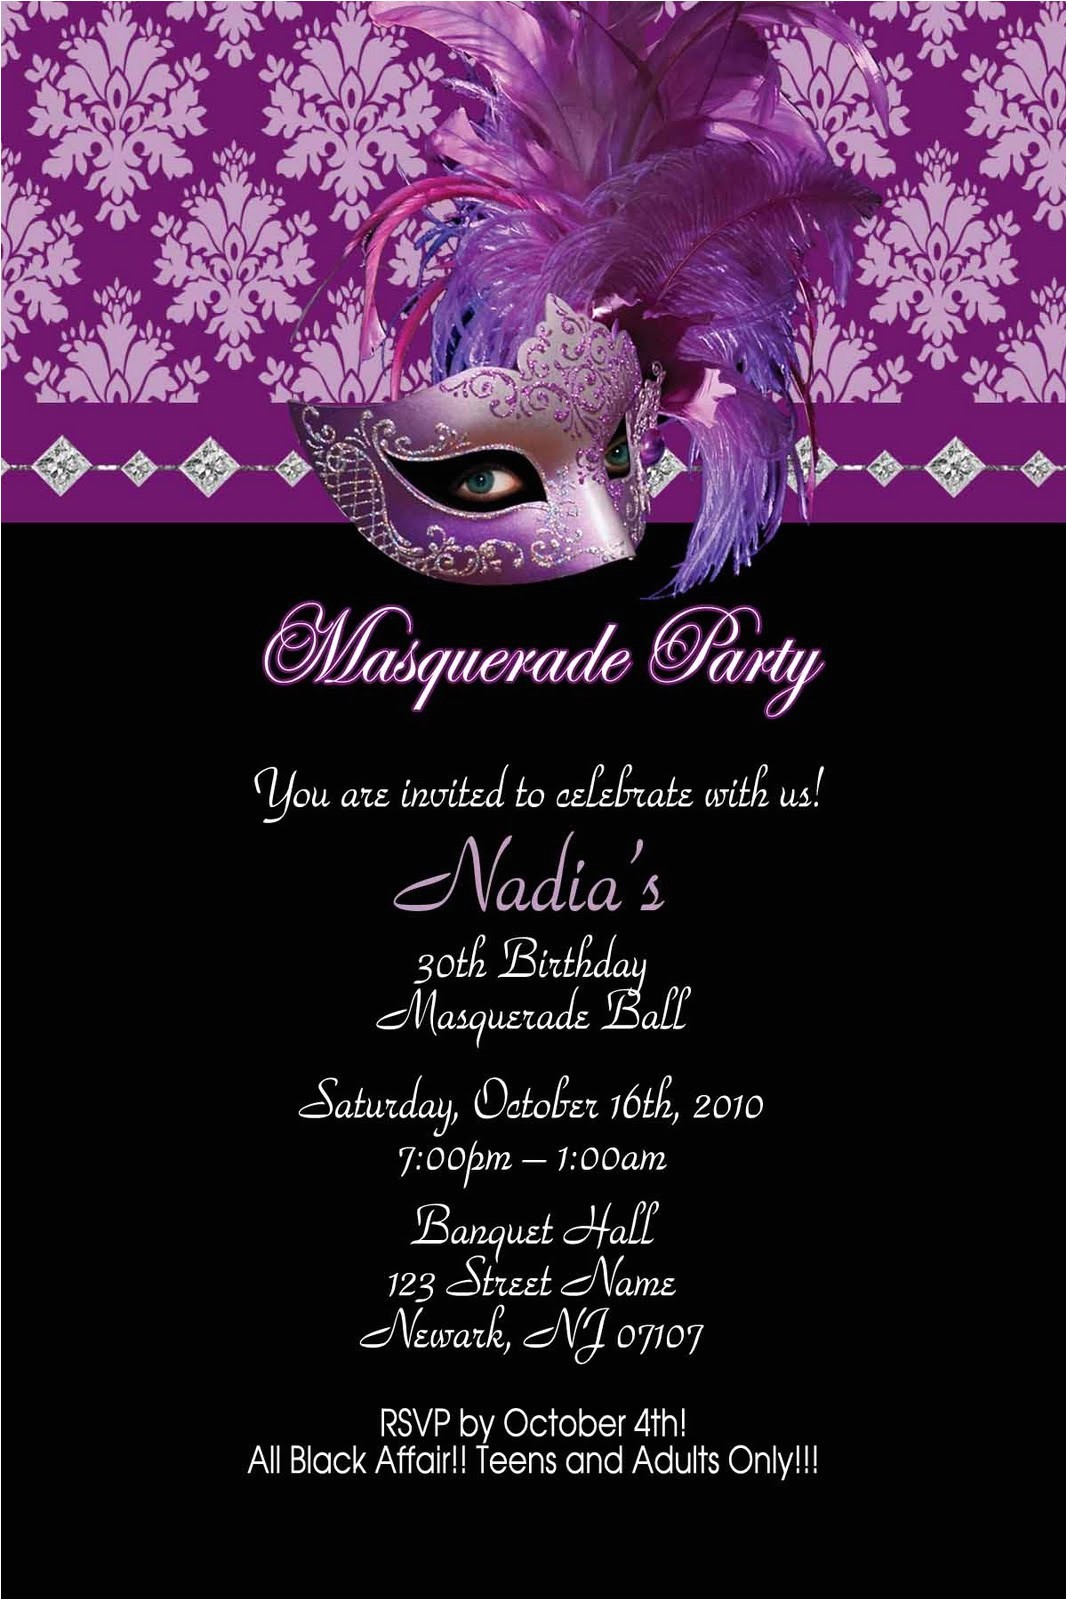 Masquerade themed Quinceanera Invitations Yellow and orange Masquerade Happy Party Invitations